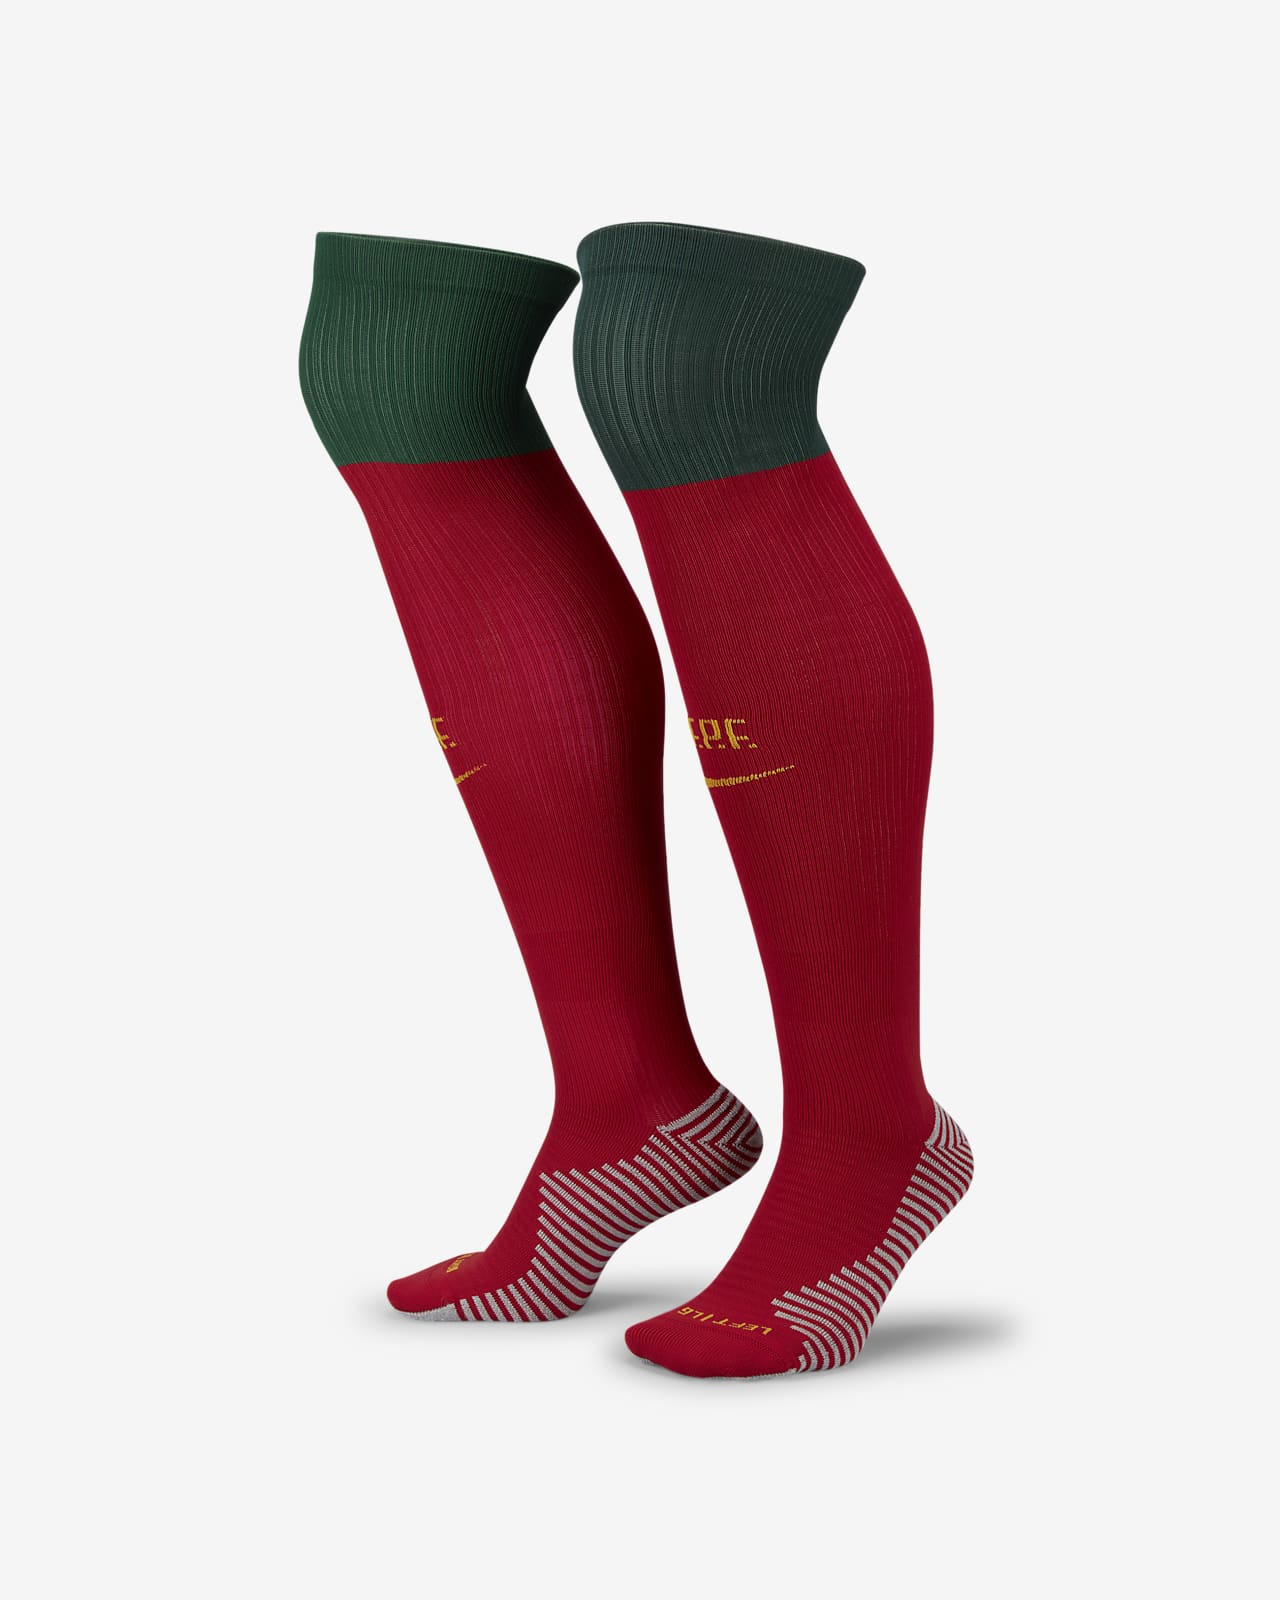 Portugal Strike Home/Away Knee-High Football Socks